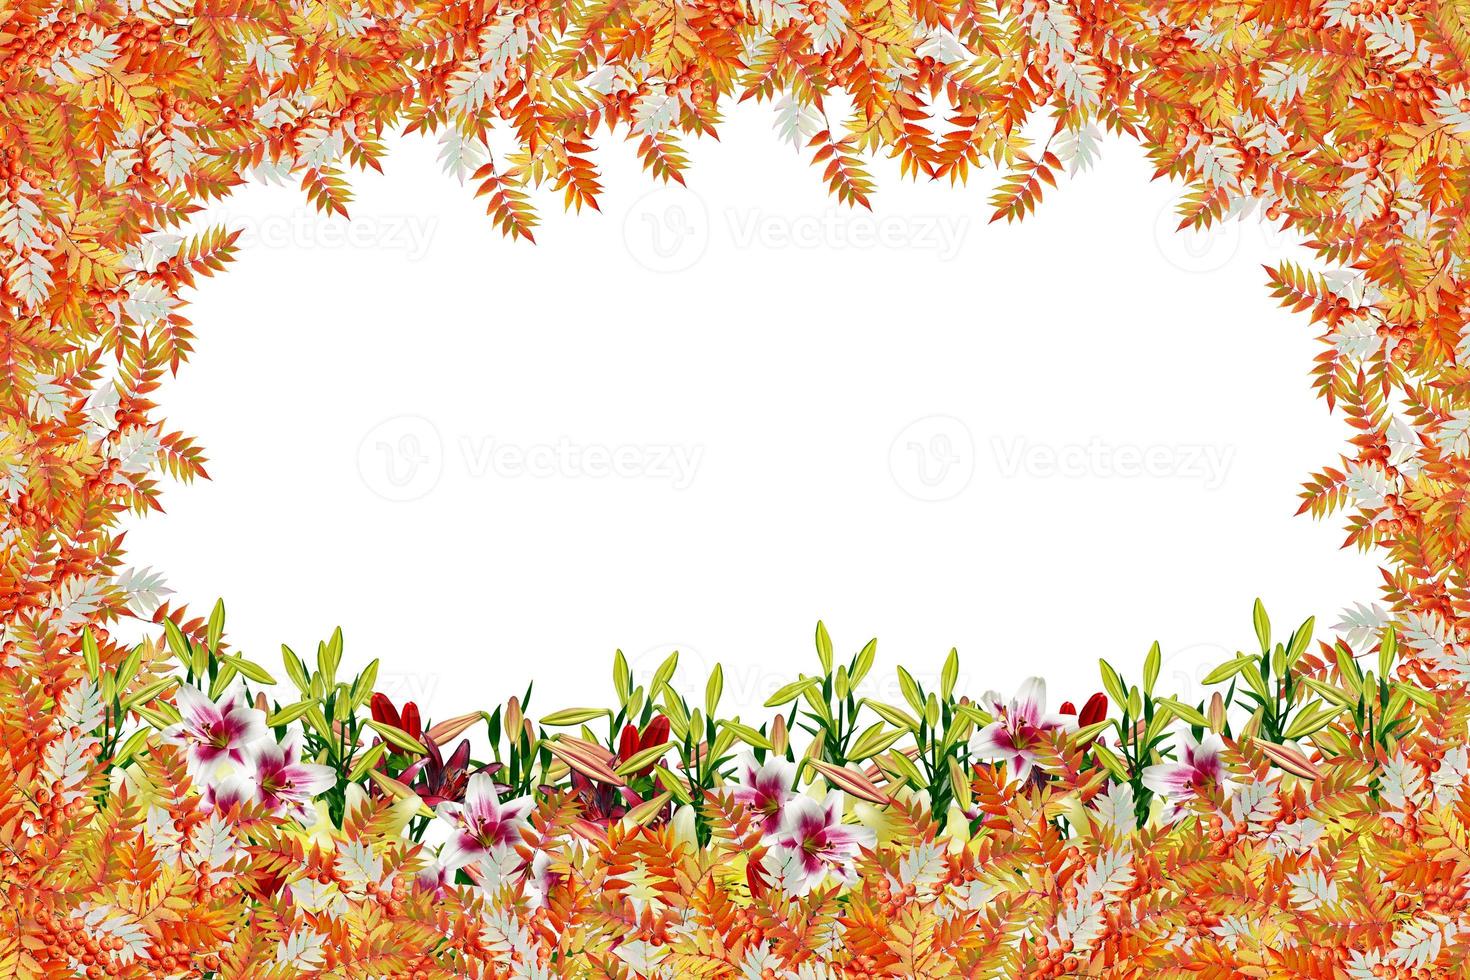 Colorful autumn foliage isolated on white background. Indian summer. photo